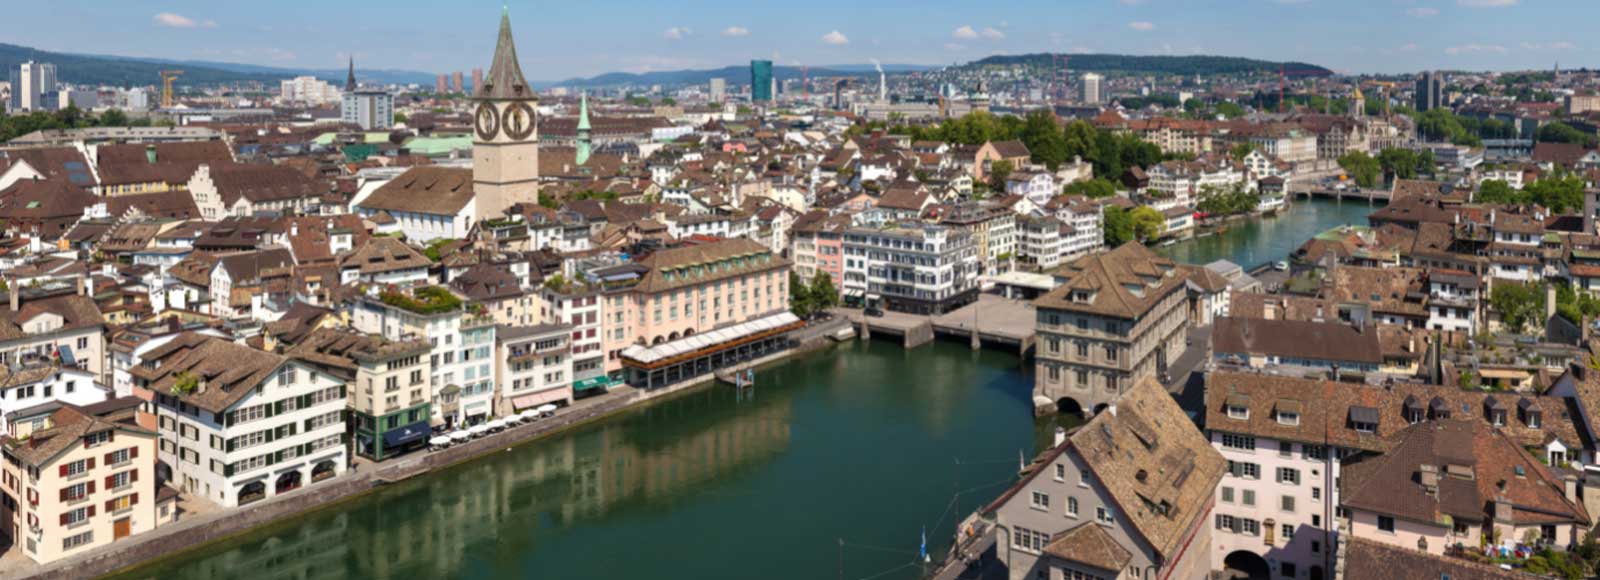 Transfer Offers in Zurich. Low Cost Transfers in  Zurich 